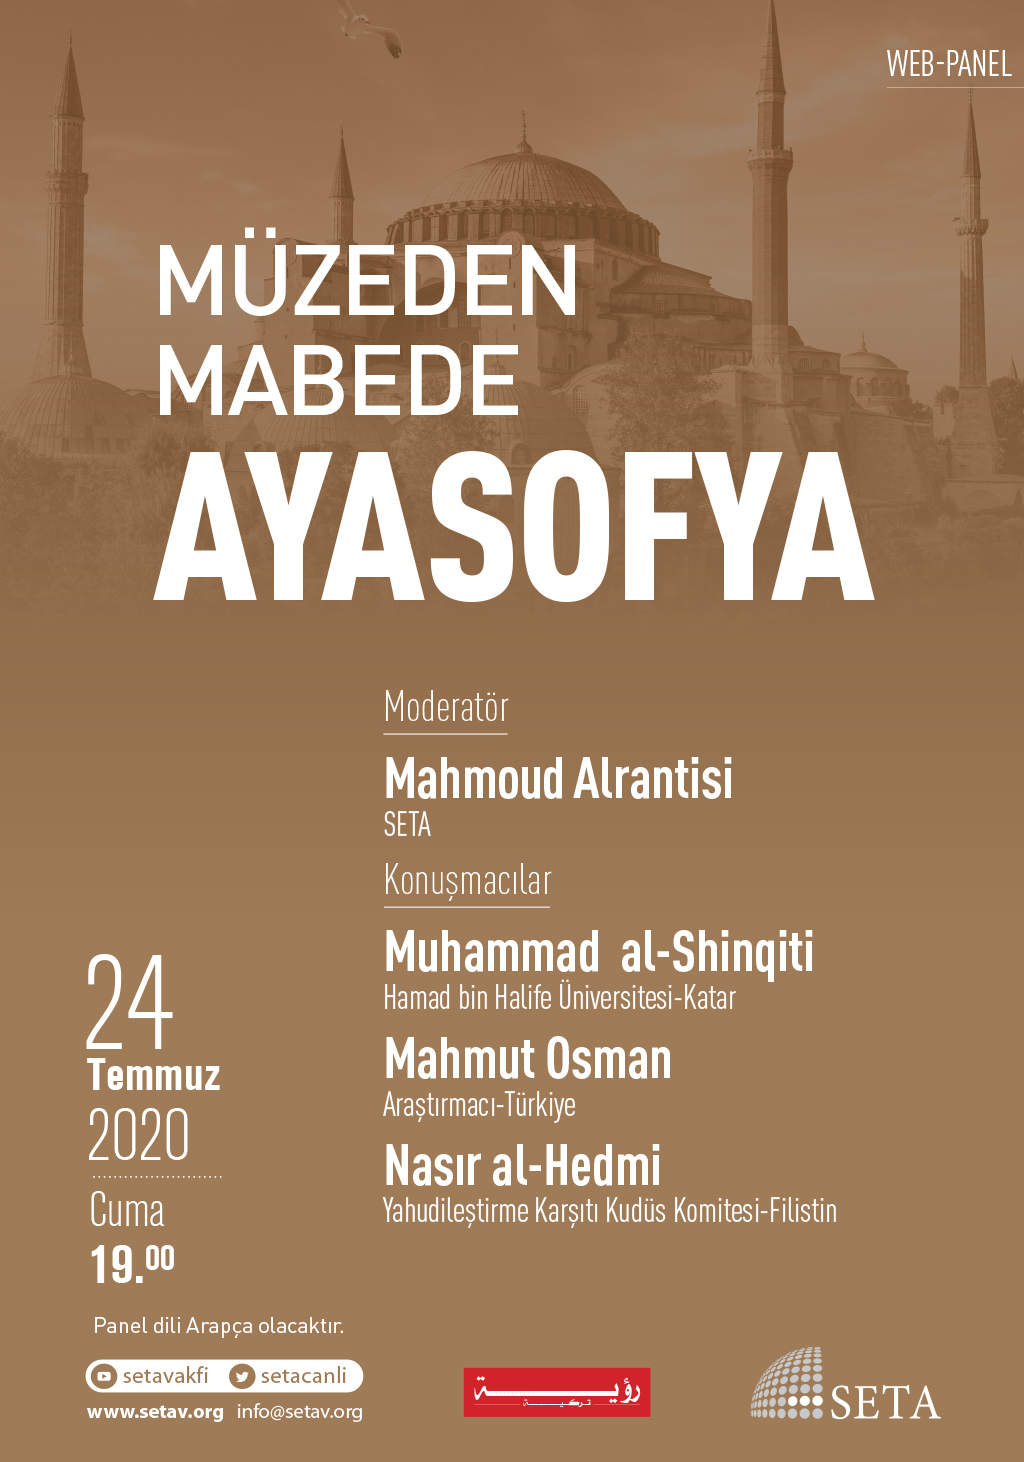 Web Panel: Müzeden Mabede Ayasofya